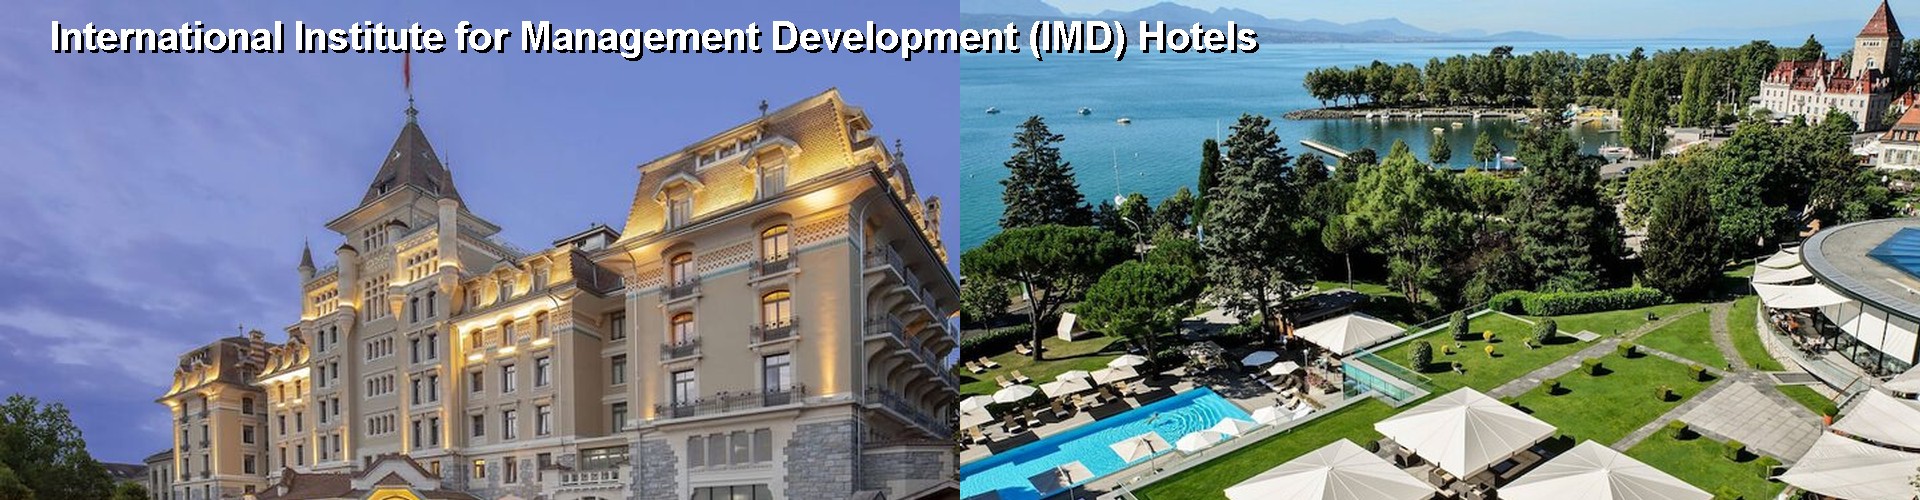 5 Best Hotels near International Institute for Management Development (IMD)